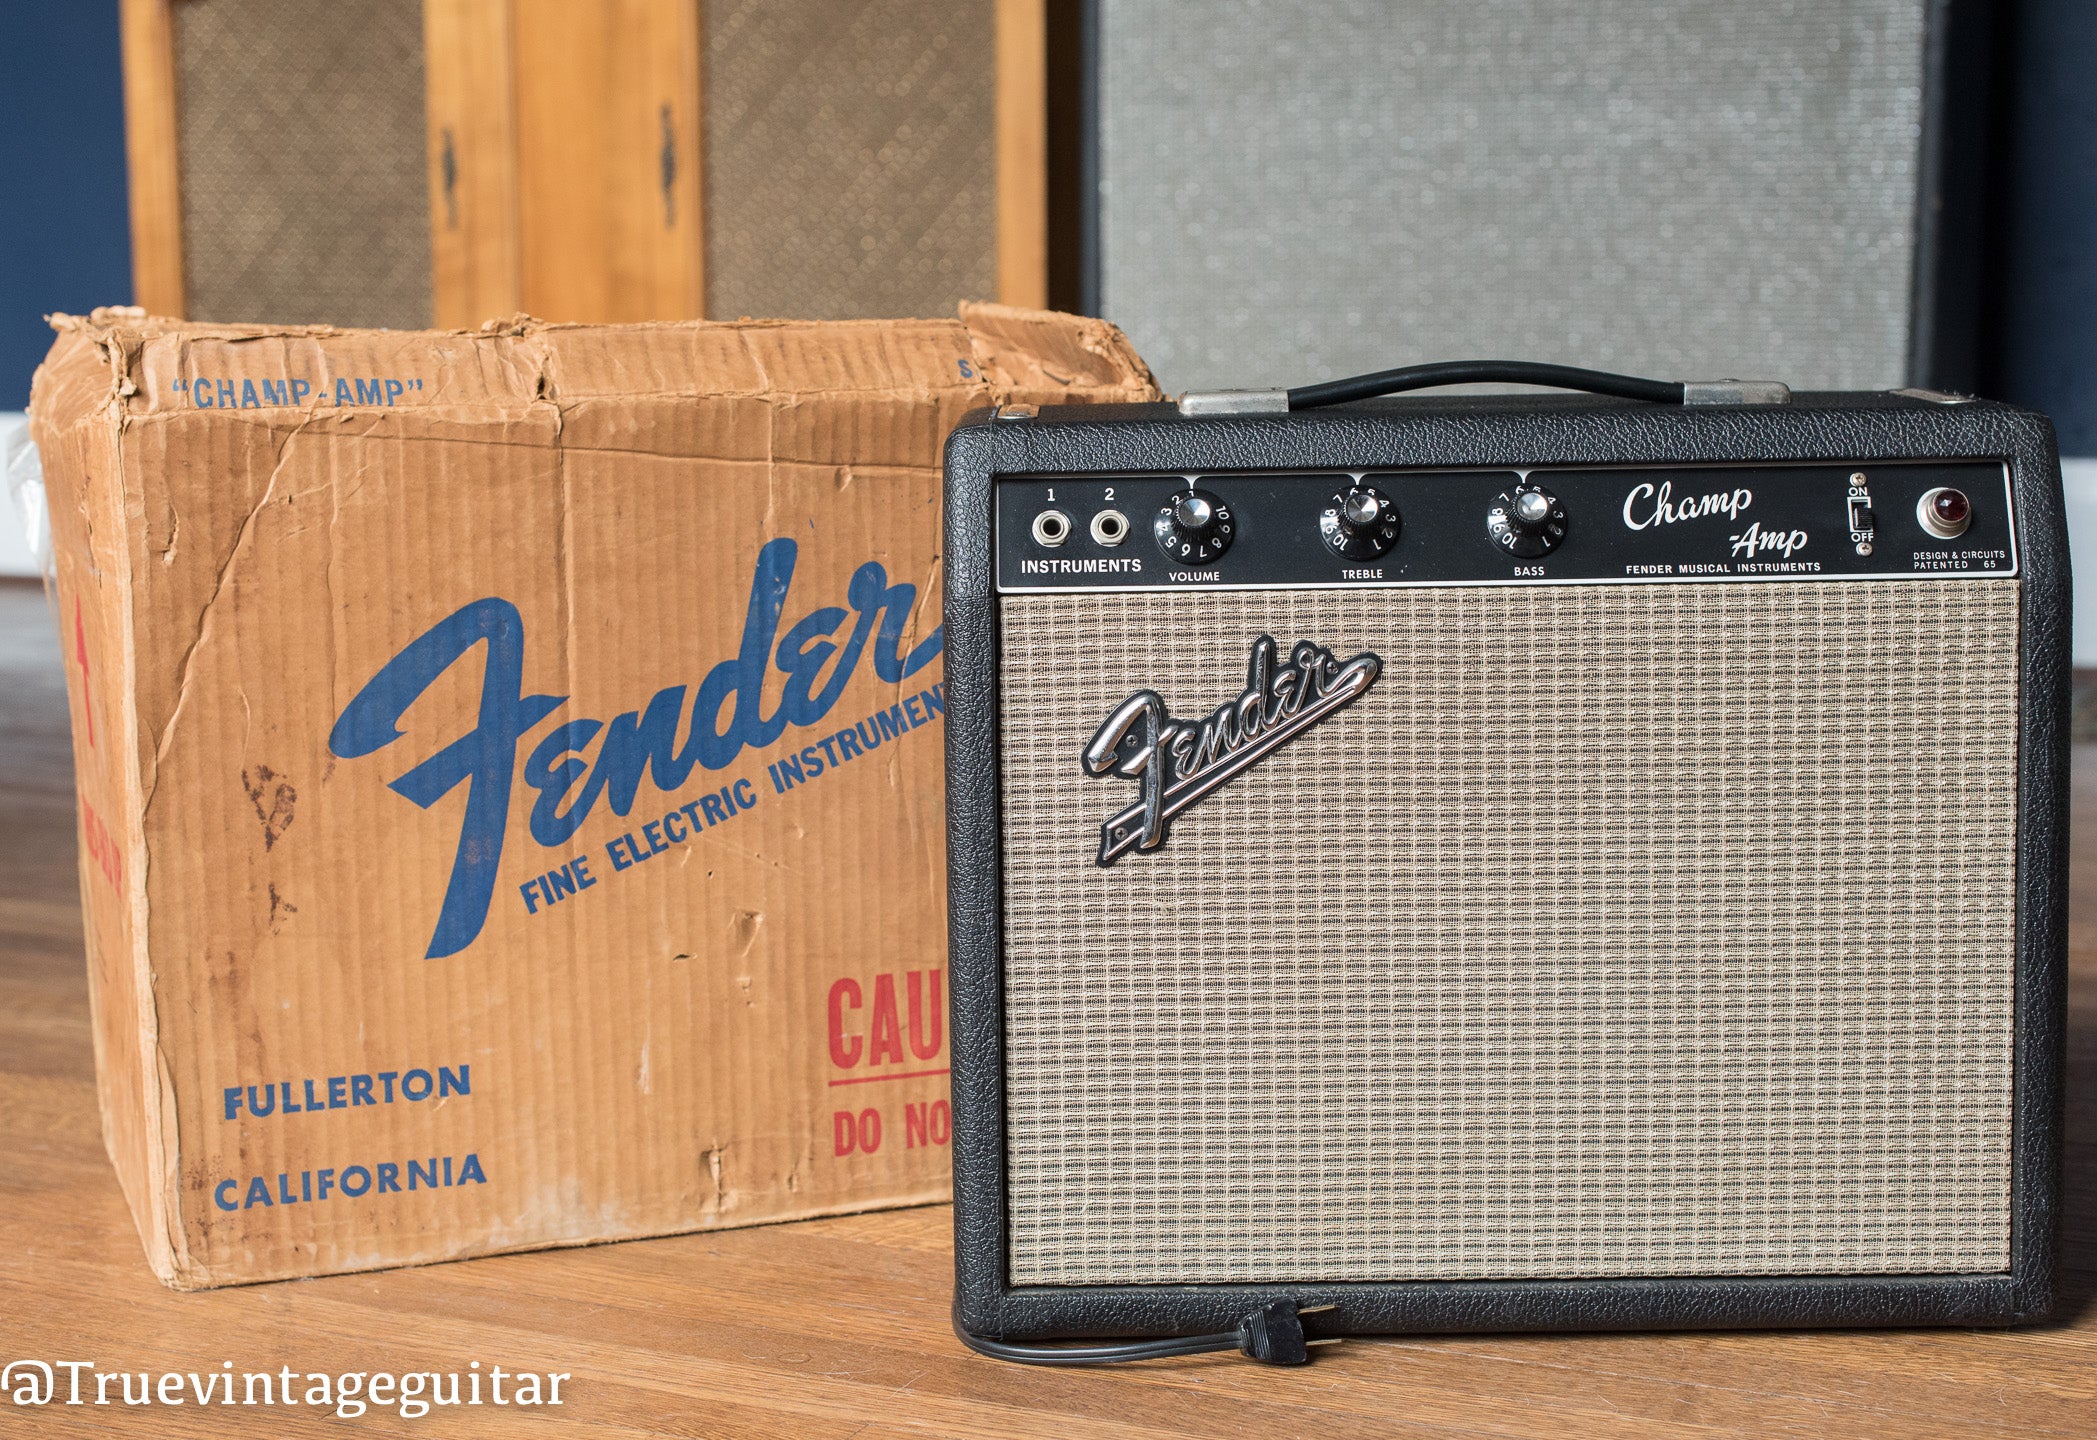 Vintage 1966 Fender Champ guitar amplifier shipping box